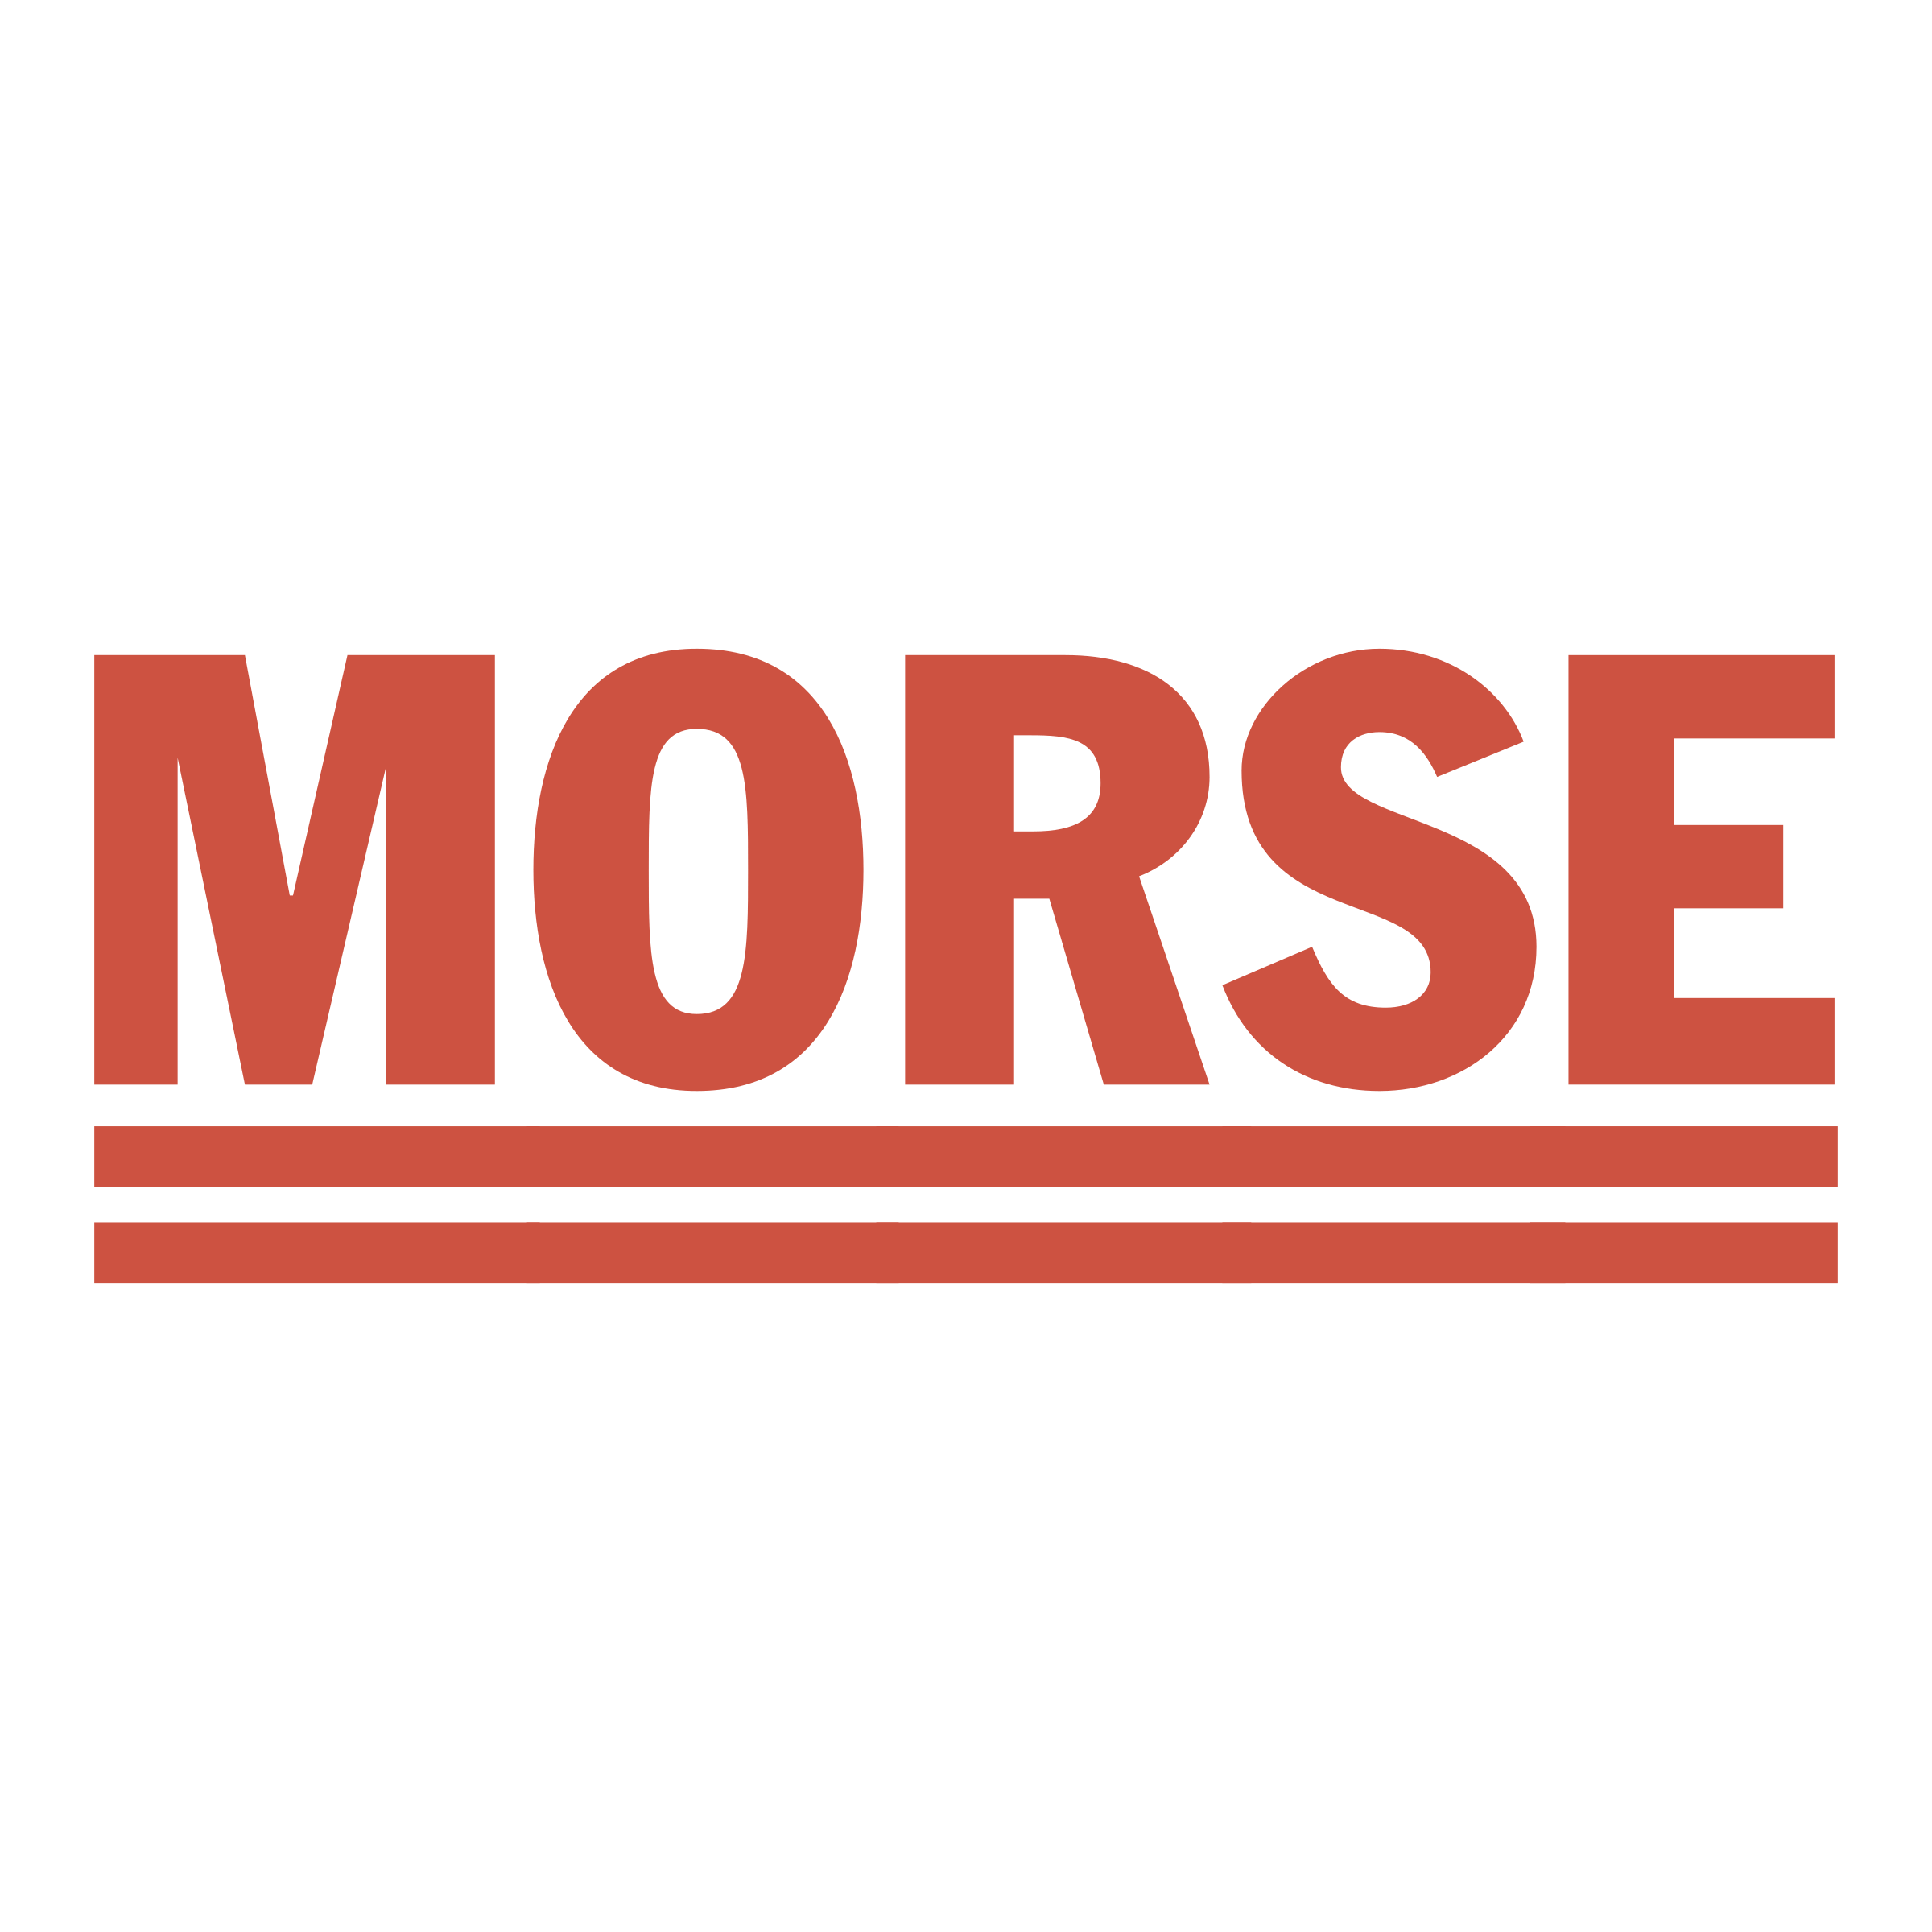 Morse Logo - Morse Logo PNG Transparent & SVG Vector - Freebie Supply